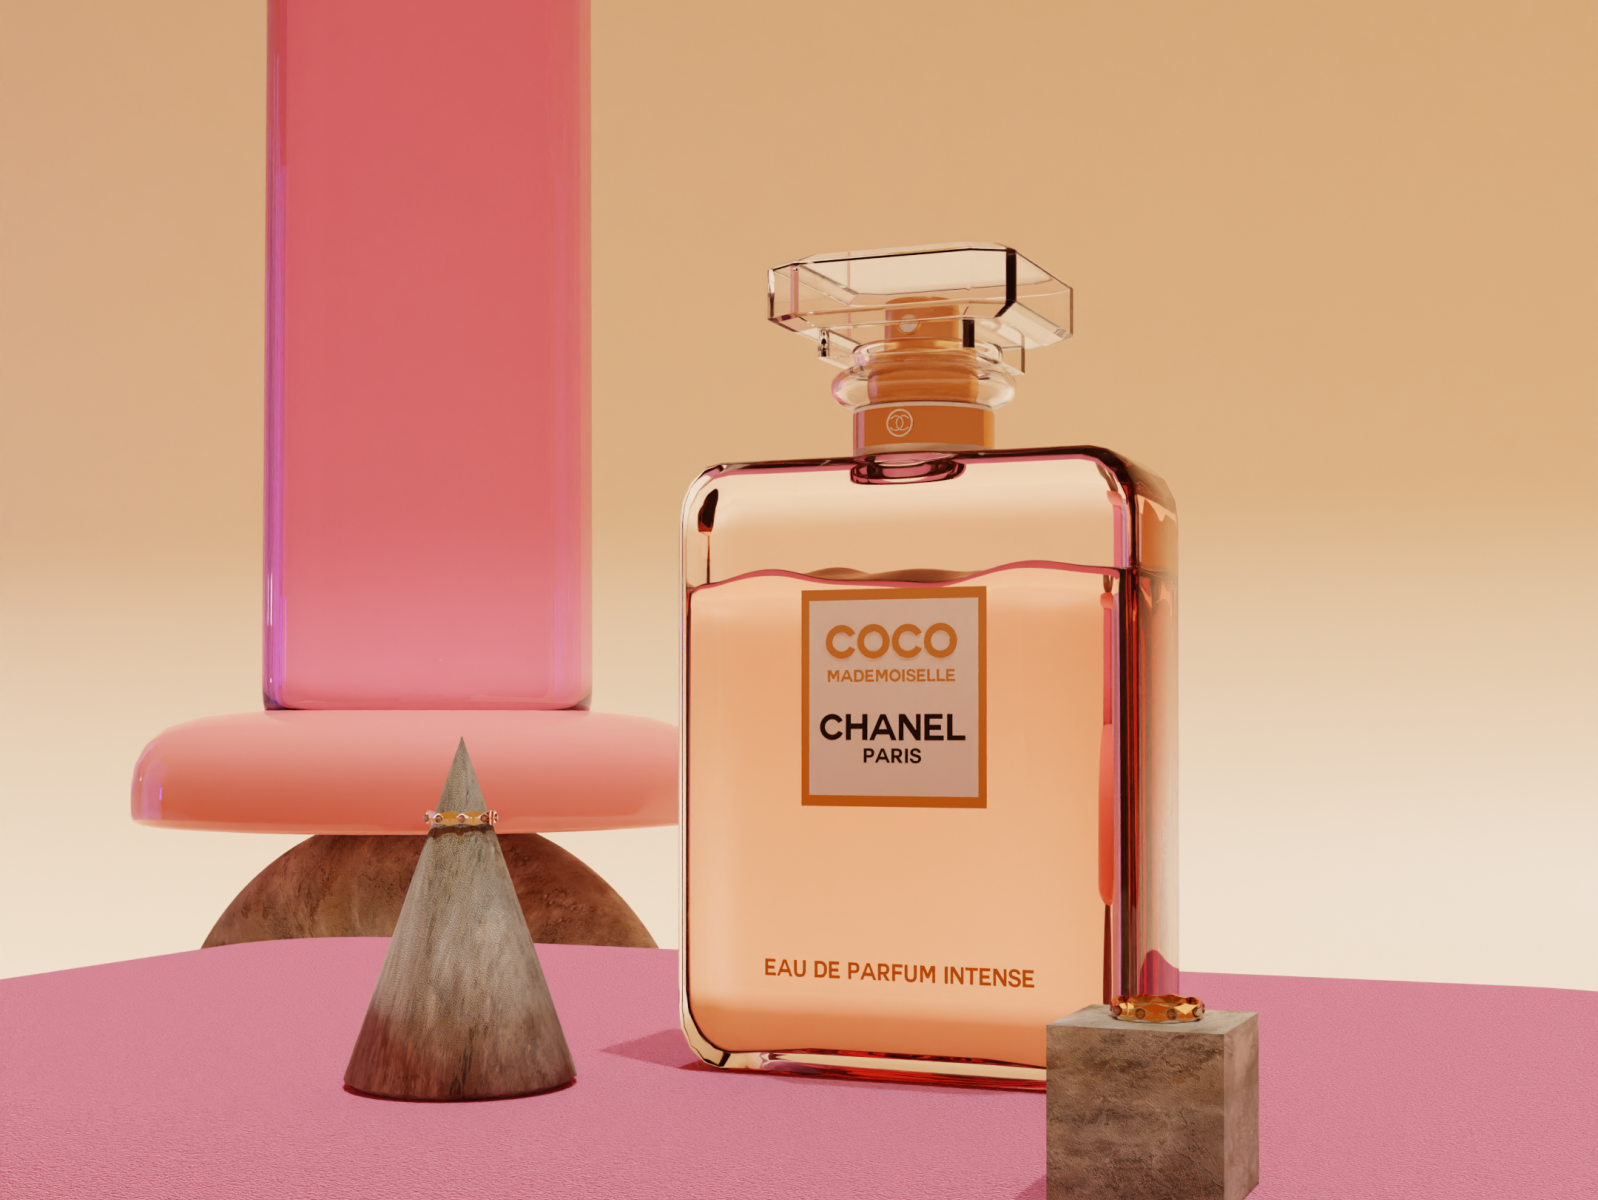 Chanel Perfume Bottle Isolated on Red & Blue Background. Bottle